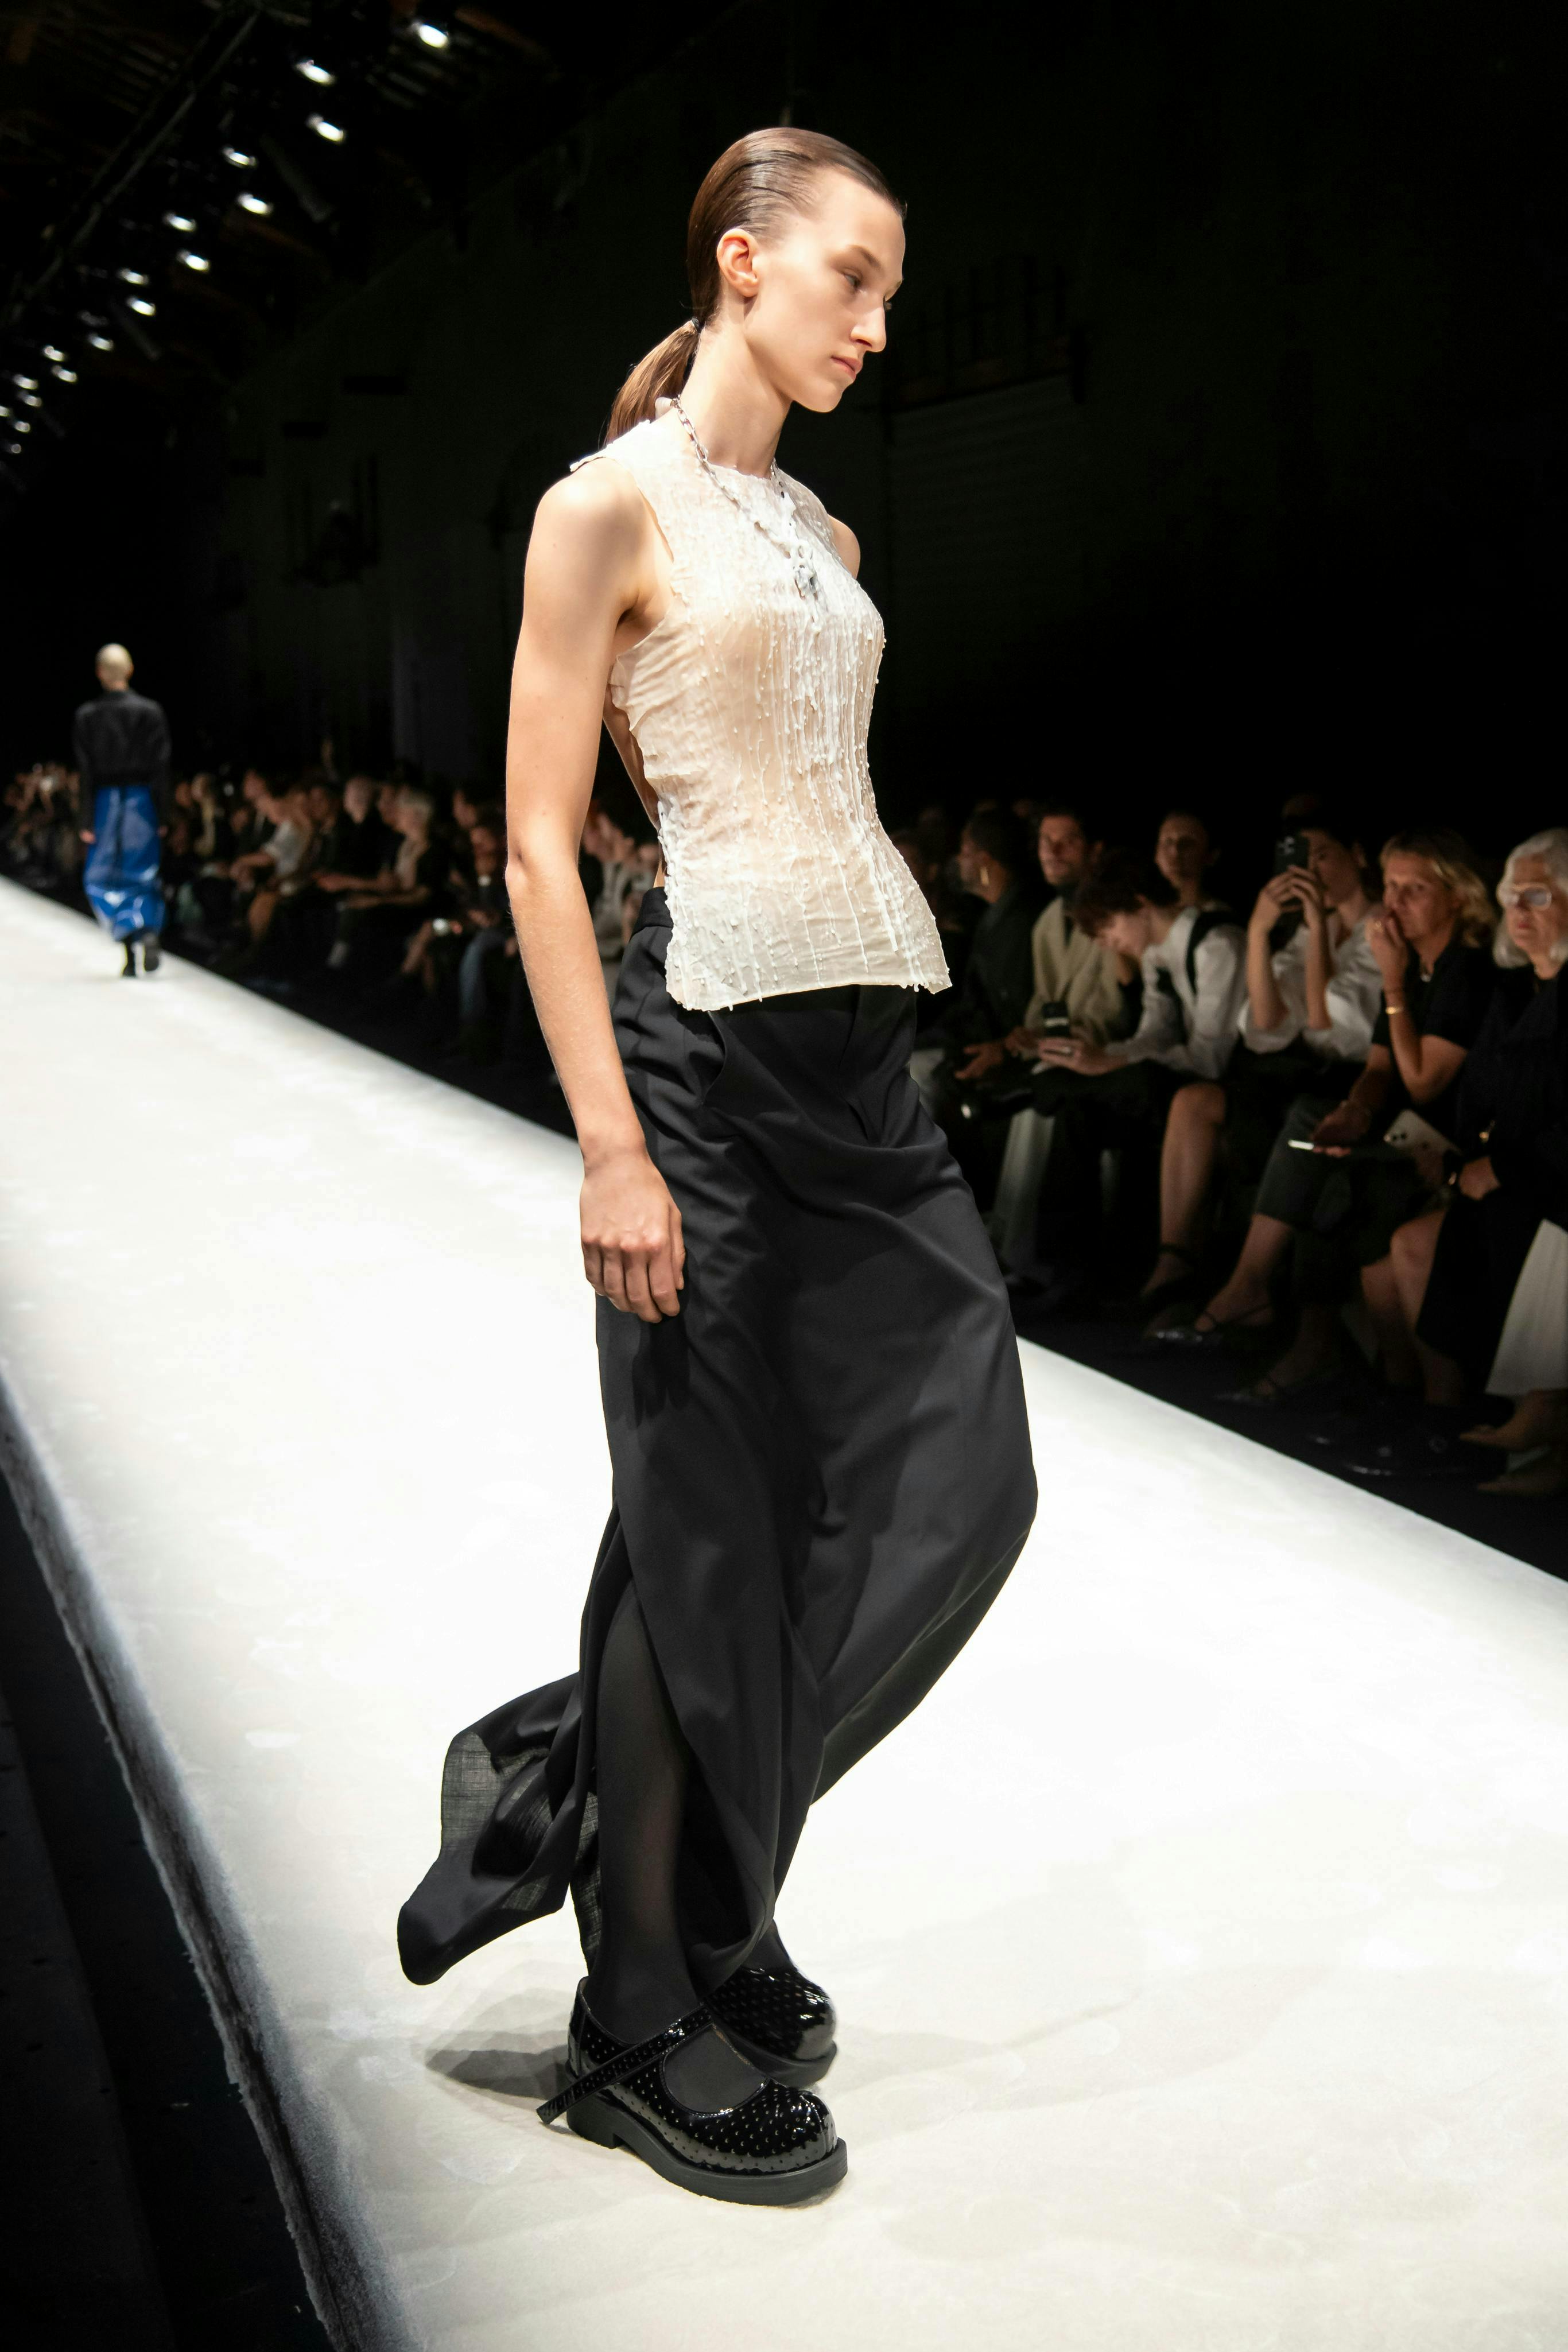 model on runway wearing white top and black pants